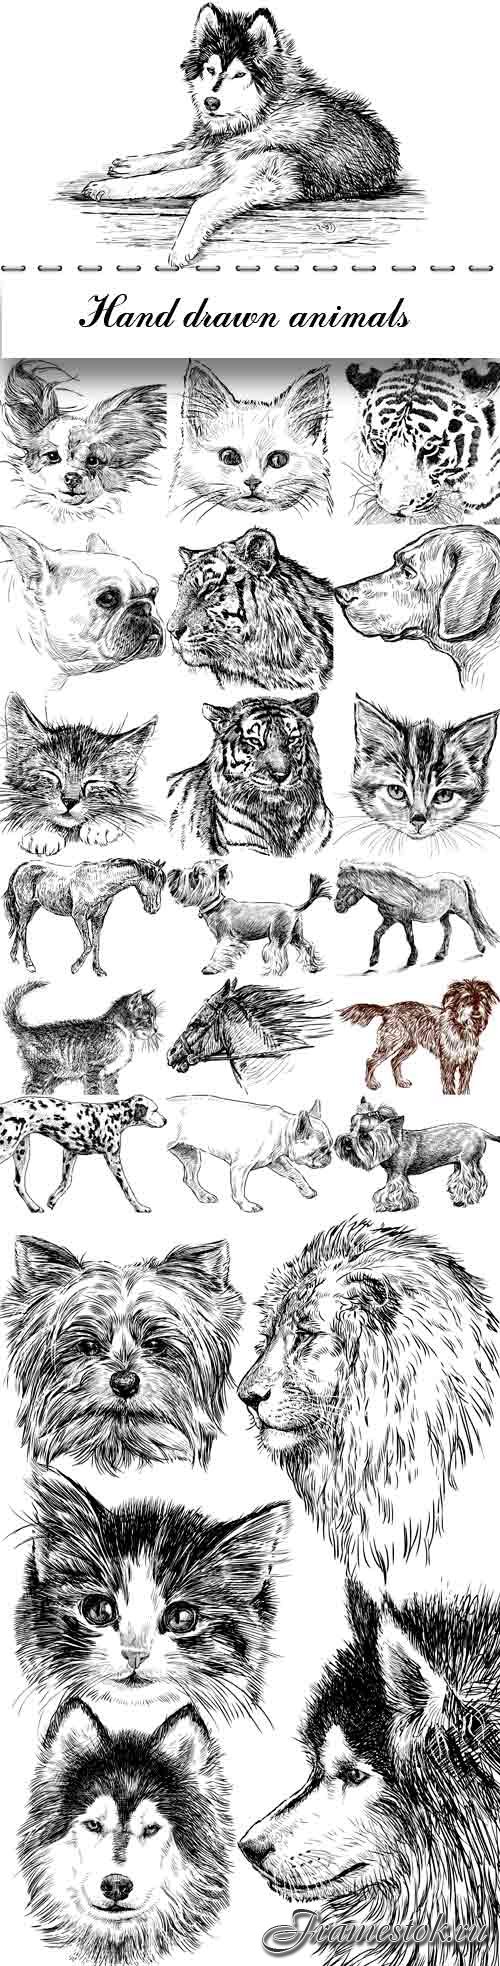 Hand drawn animals vector set